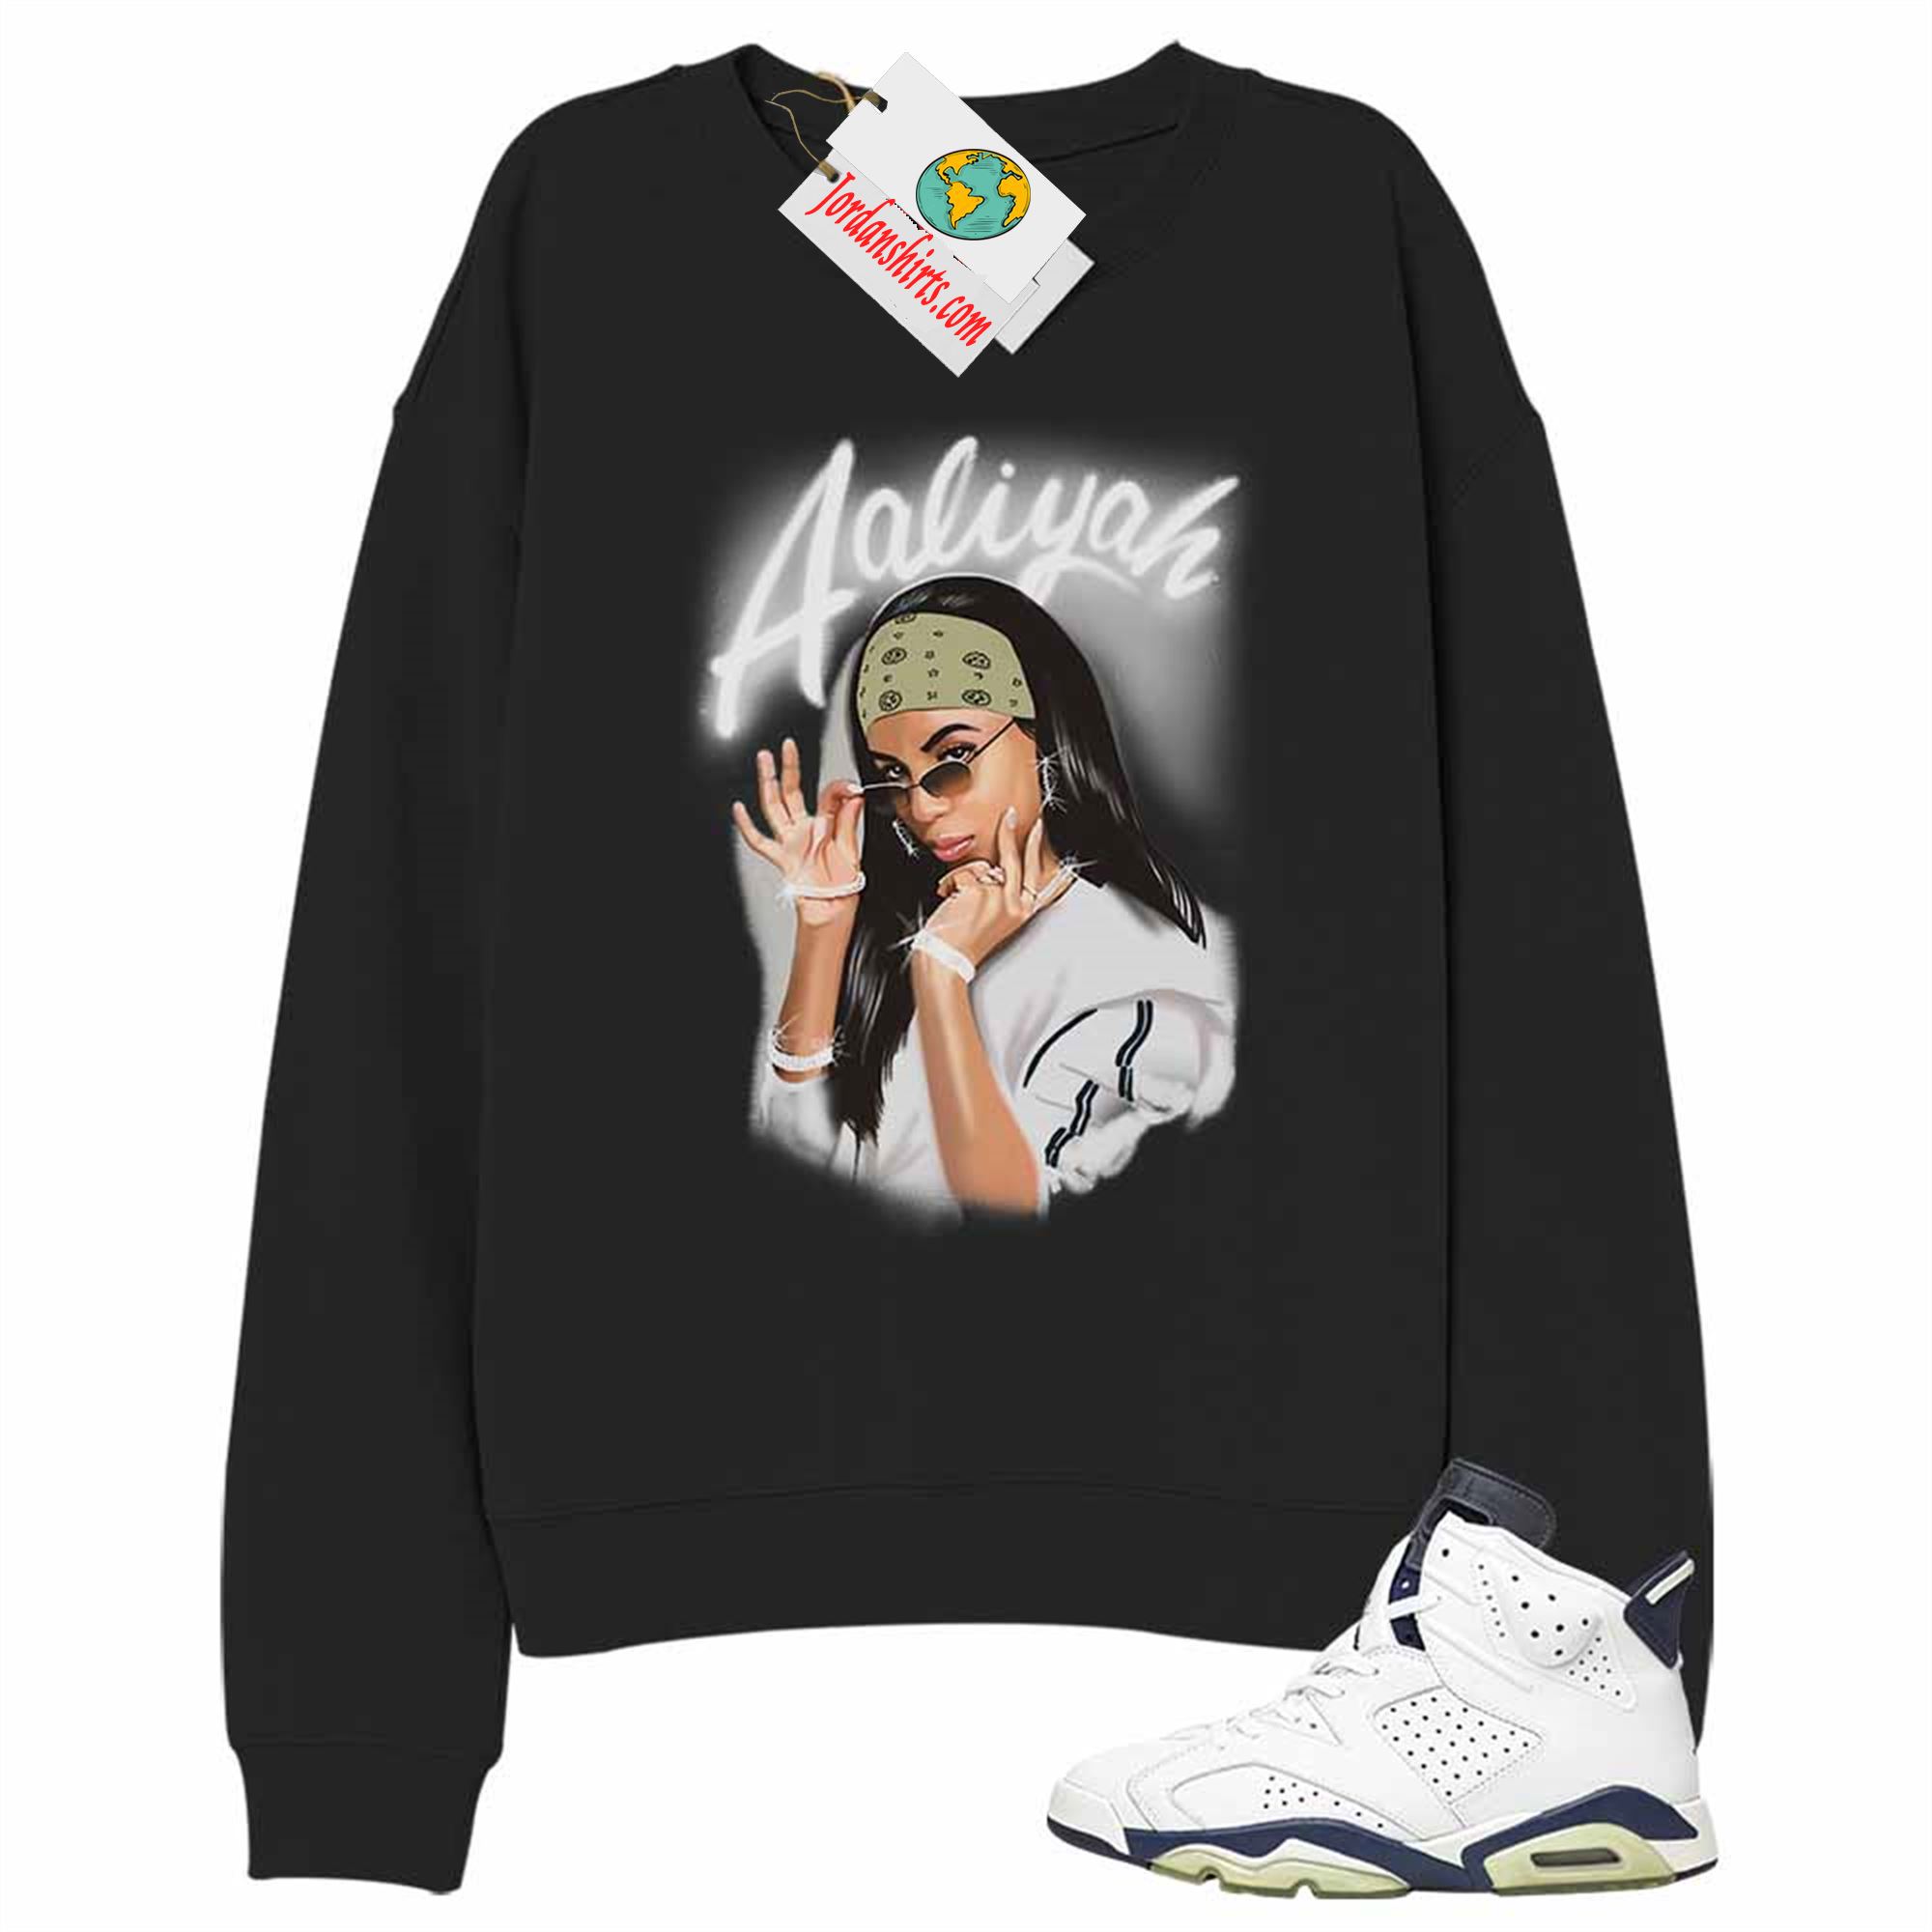 Jordan 6 Sweatshirt, Aaliyah Airbrush Black Sweatshirt Air Jordan 6 Midnight Navy 6s Size Up To 5xl